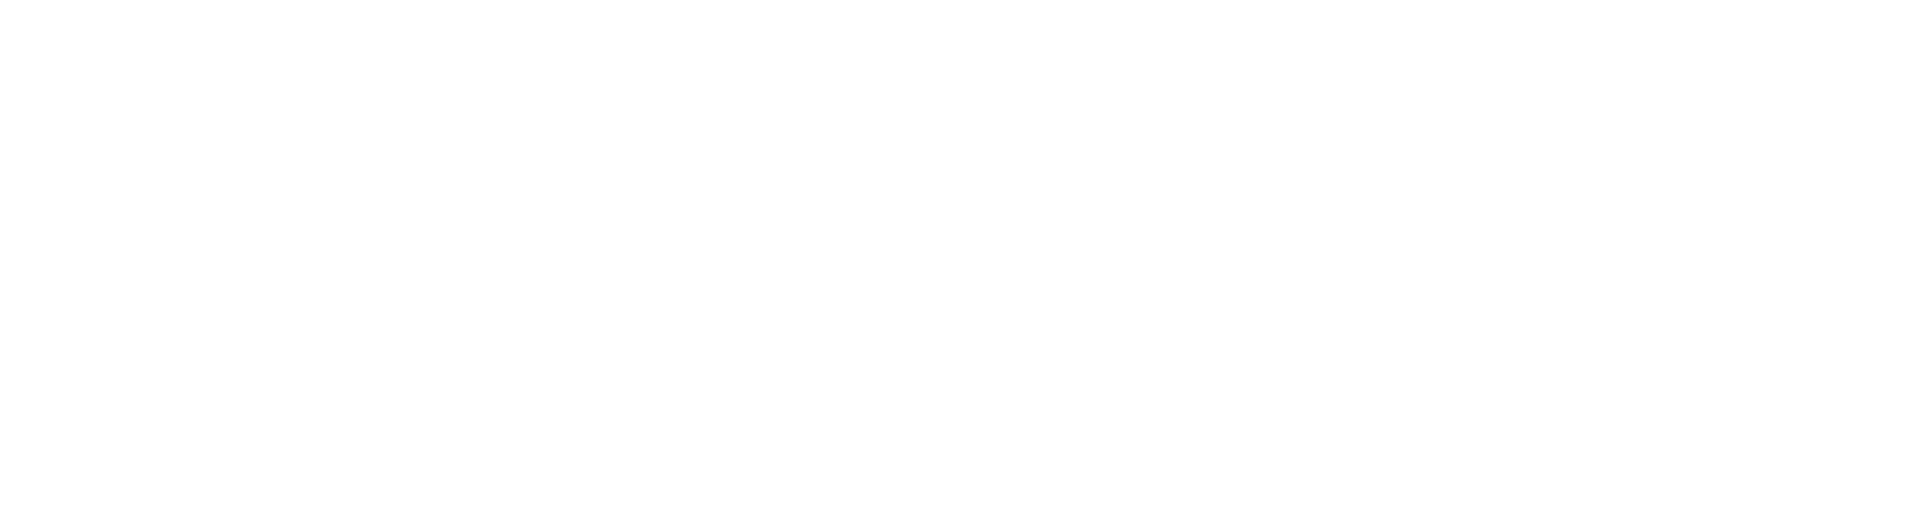 Northwest Illinois Alliance of Realtors logo